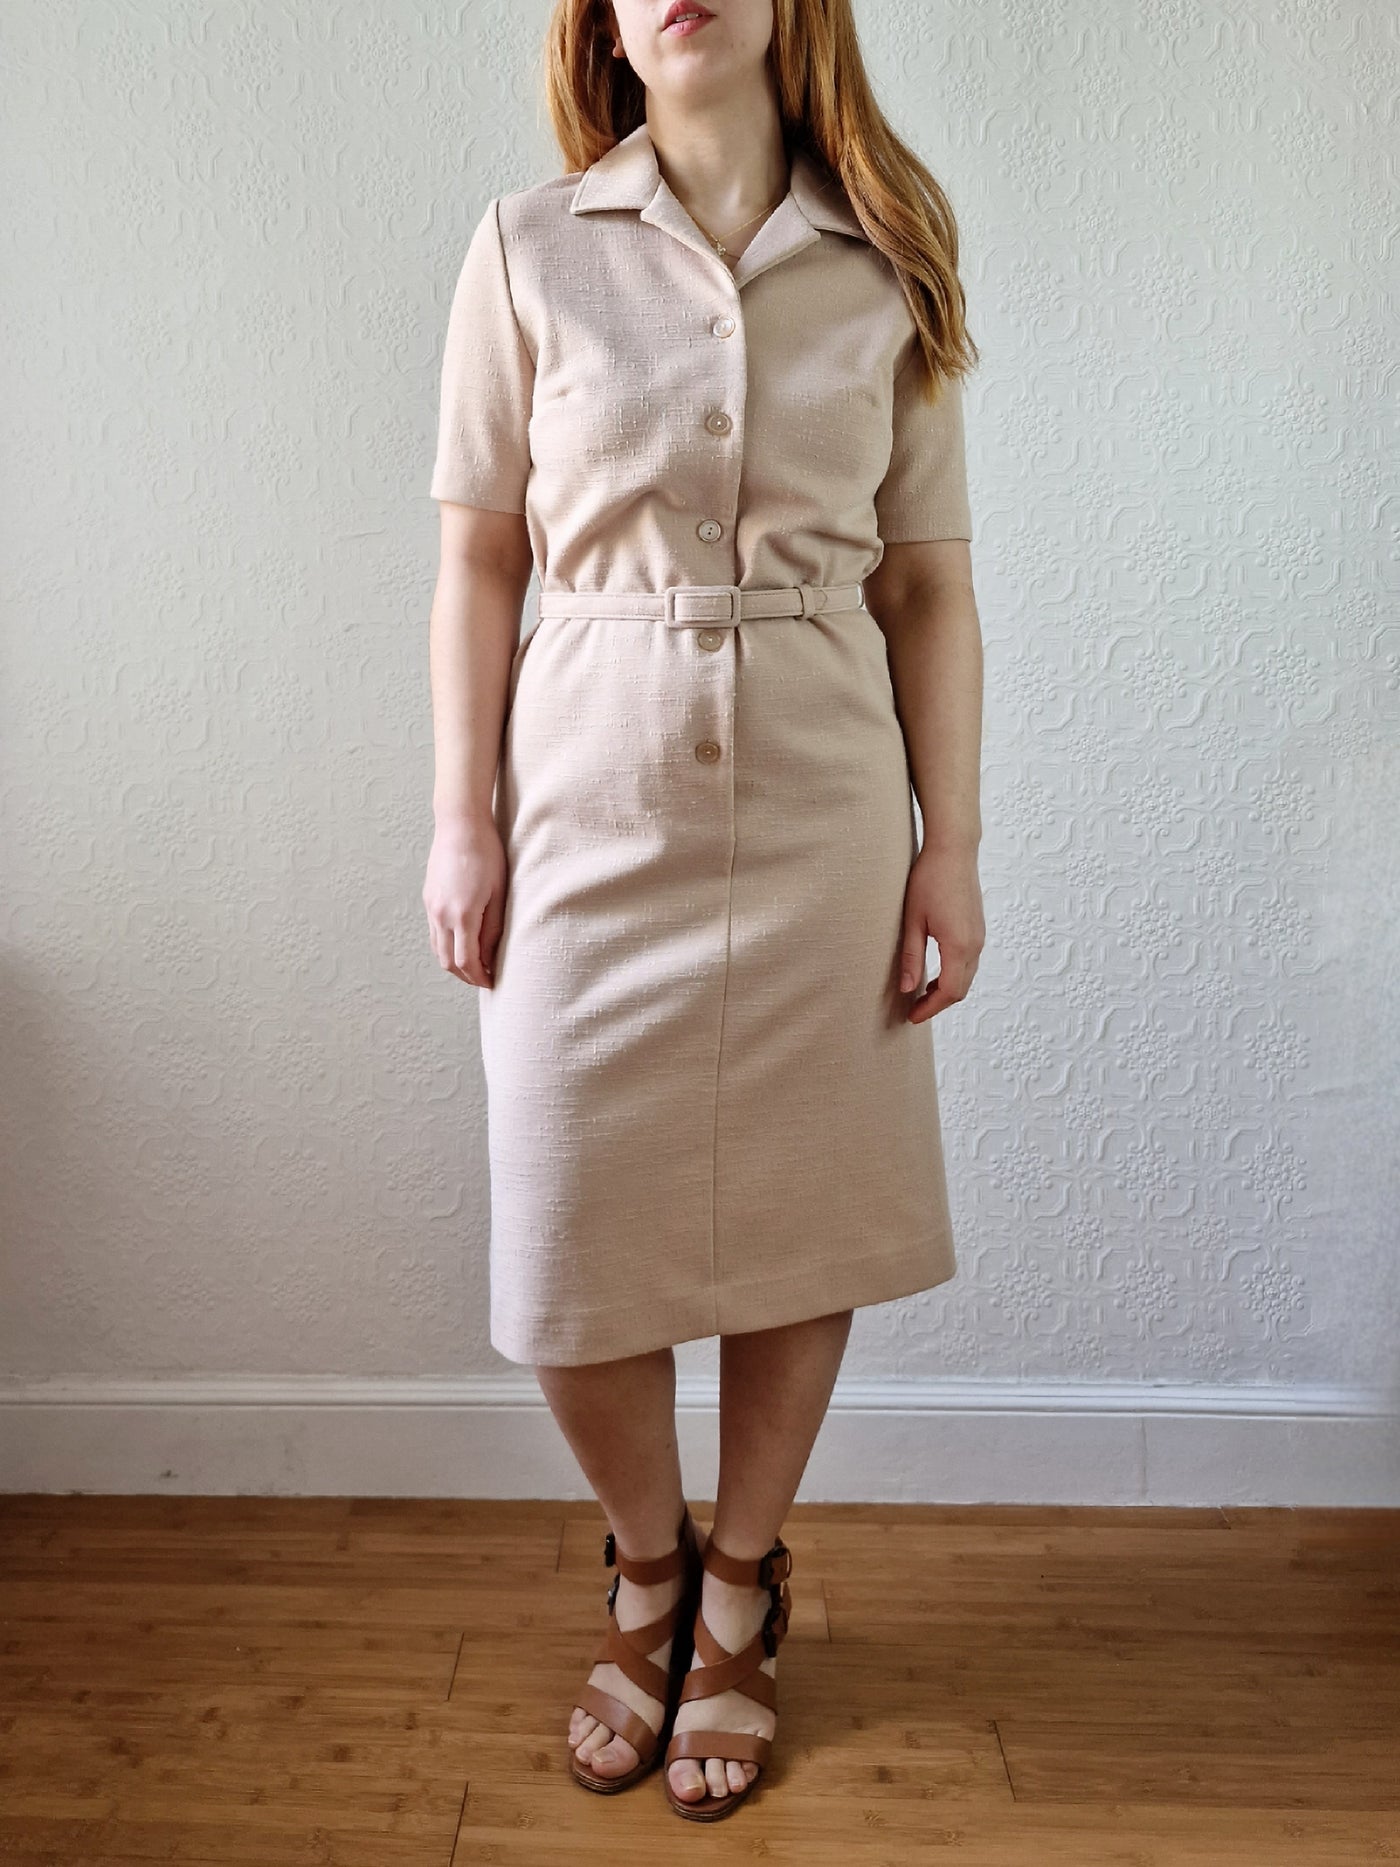 Vintage 70s Beige Short Sleeve Shirt Dress with Matching Belt - S